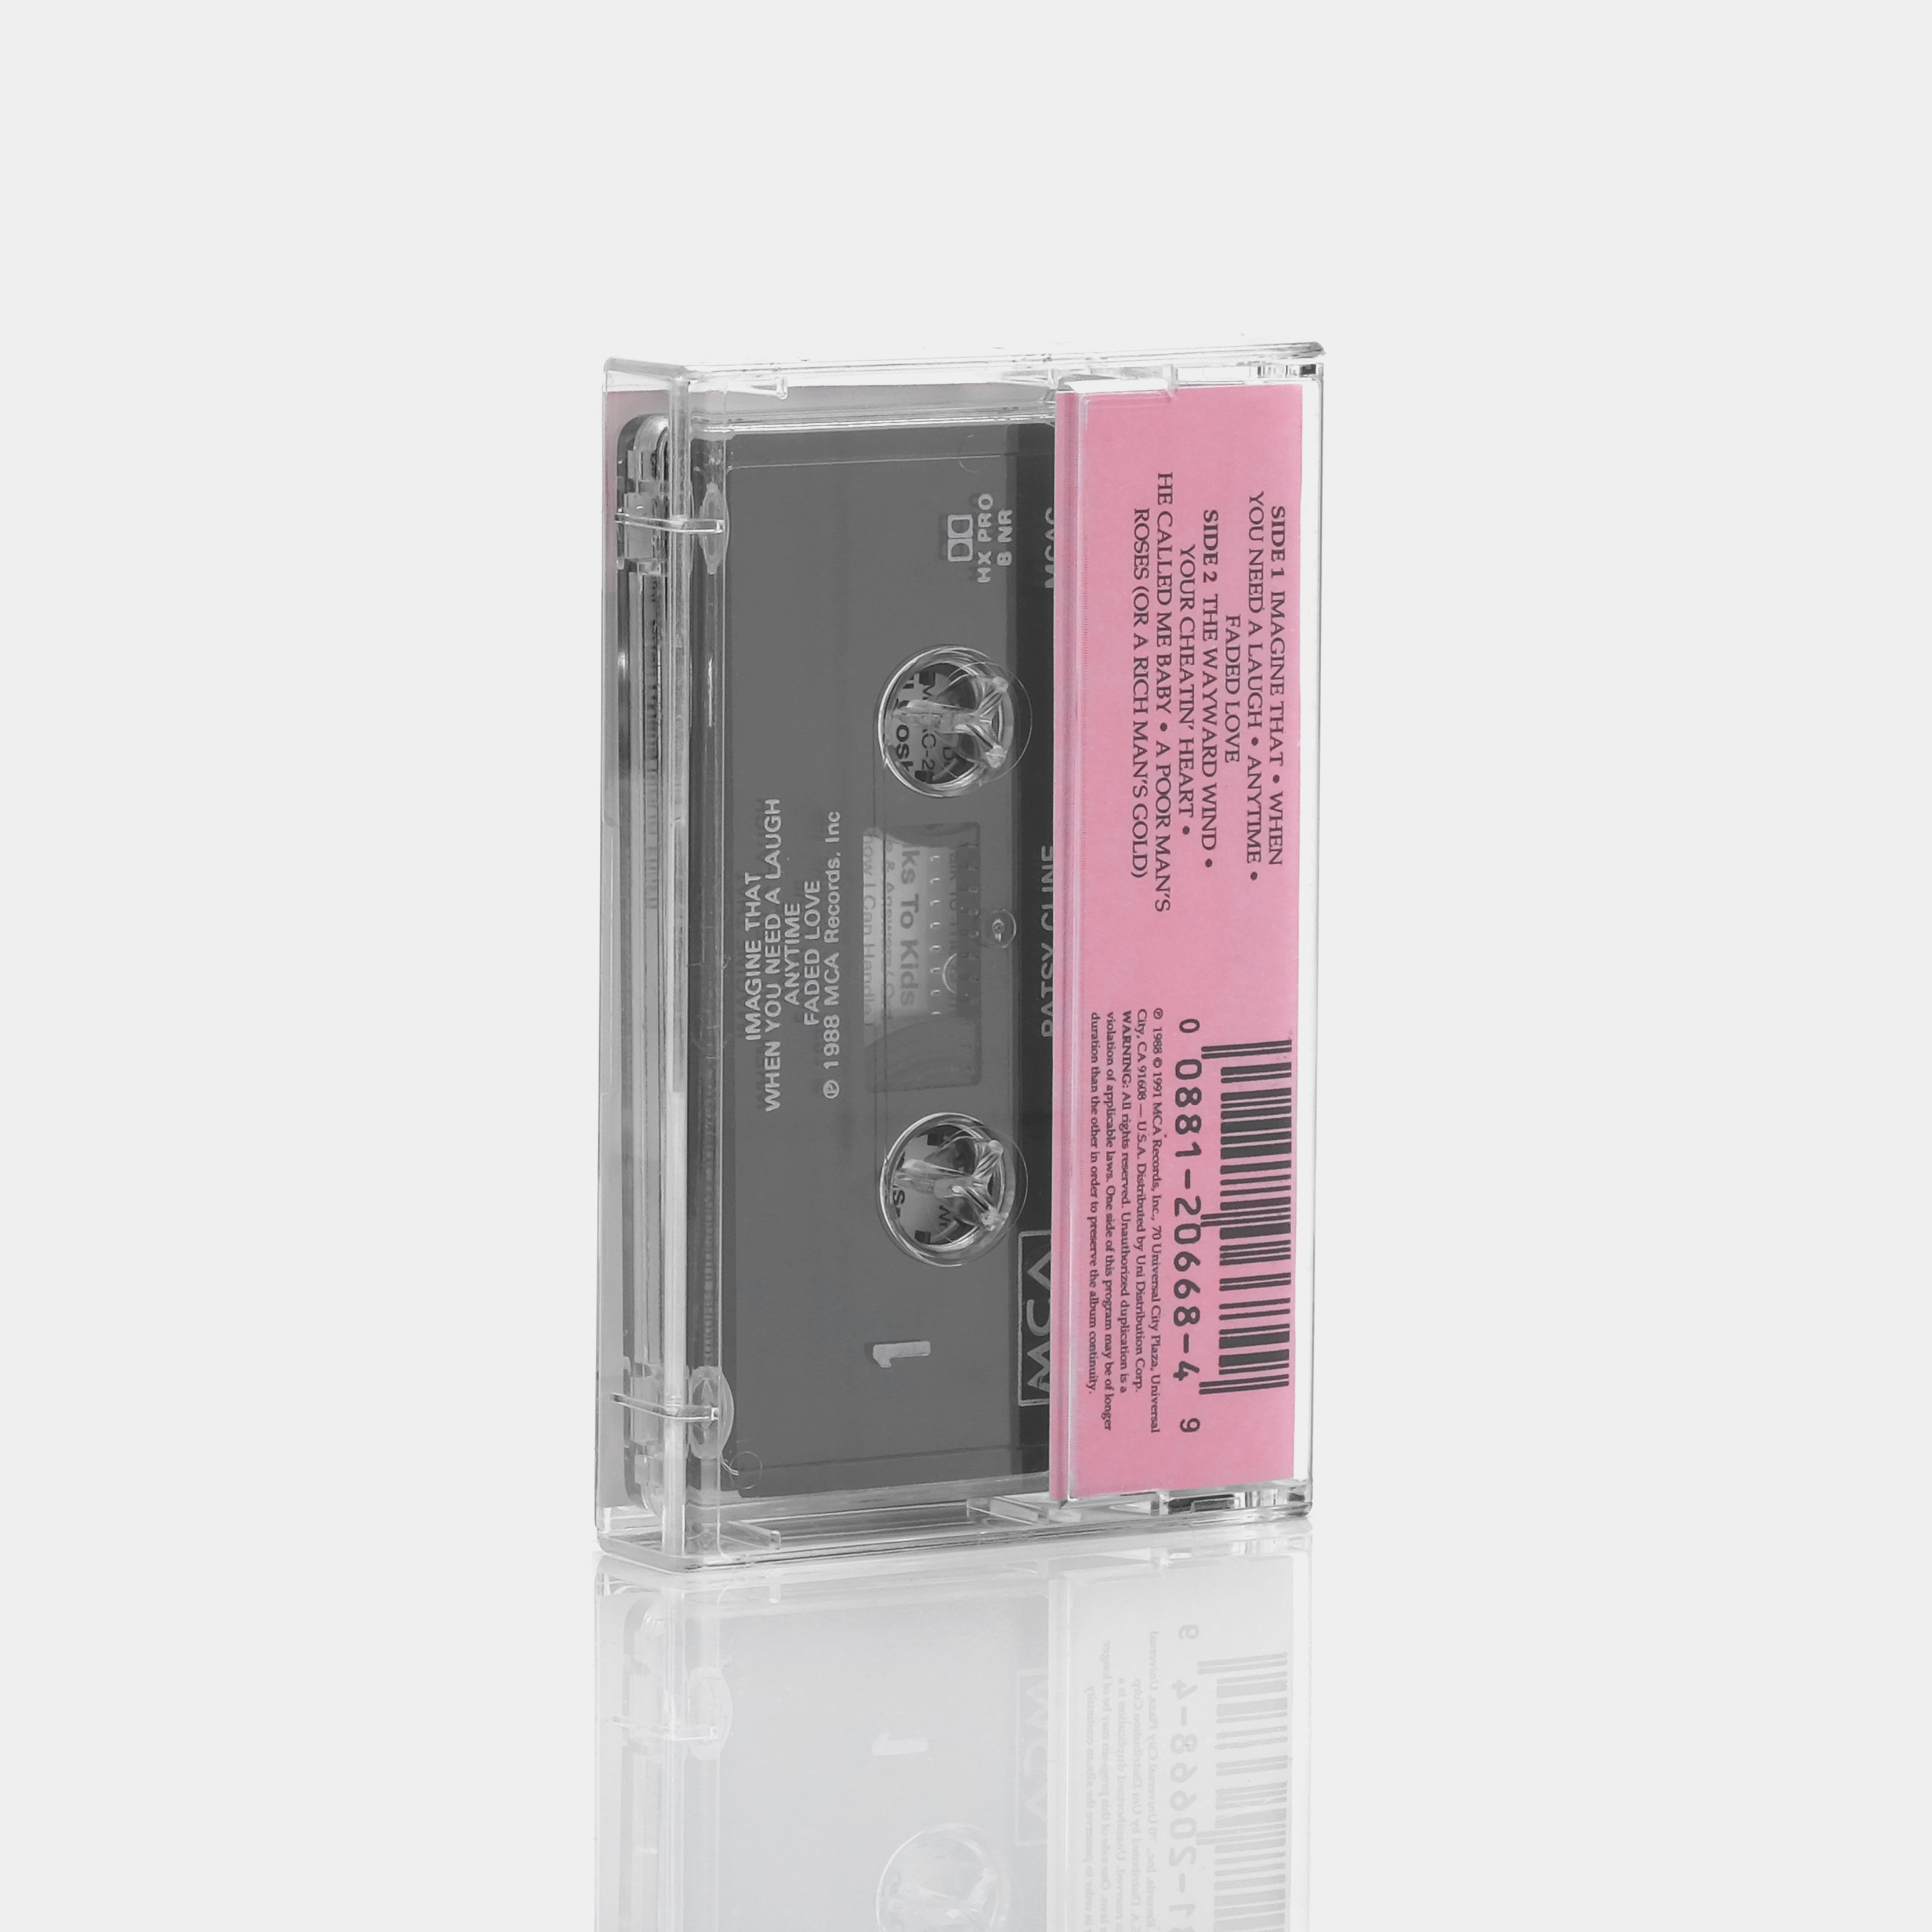 Patsy Cline - The Legendary Patsy Cline (Volume 2) Cassette Tape